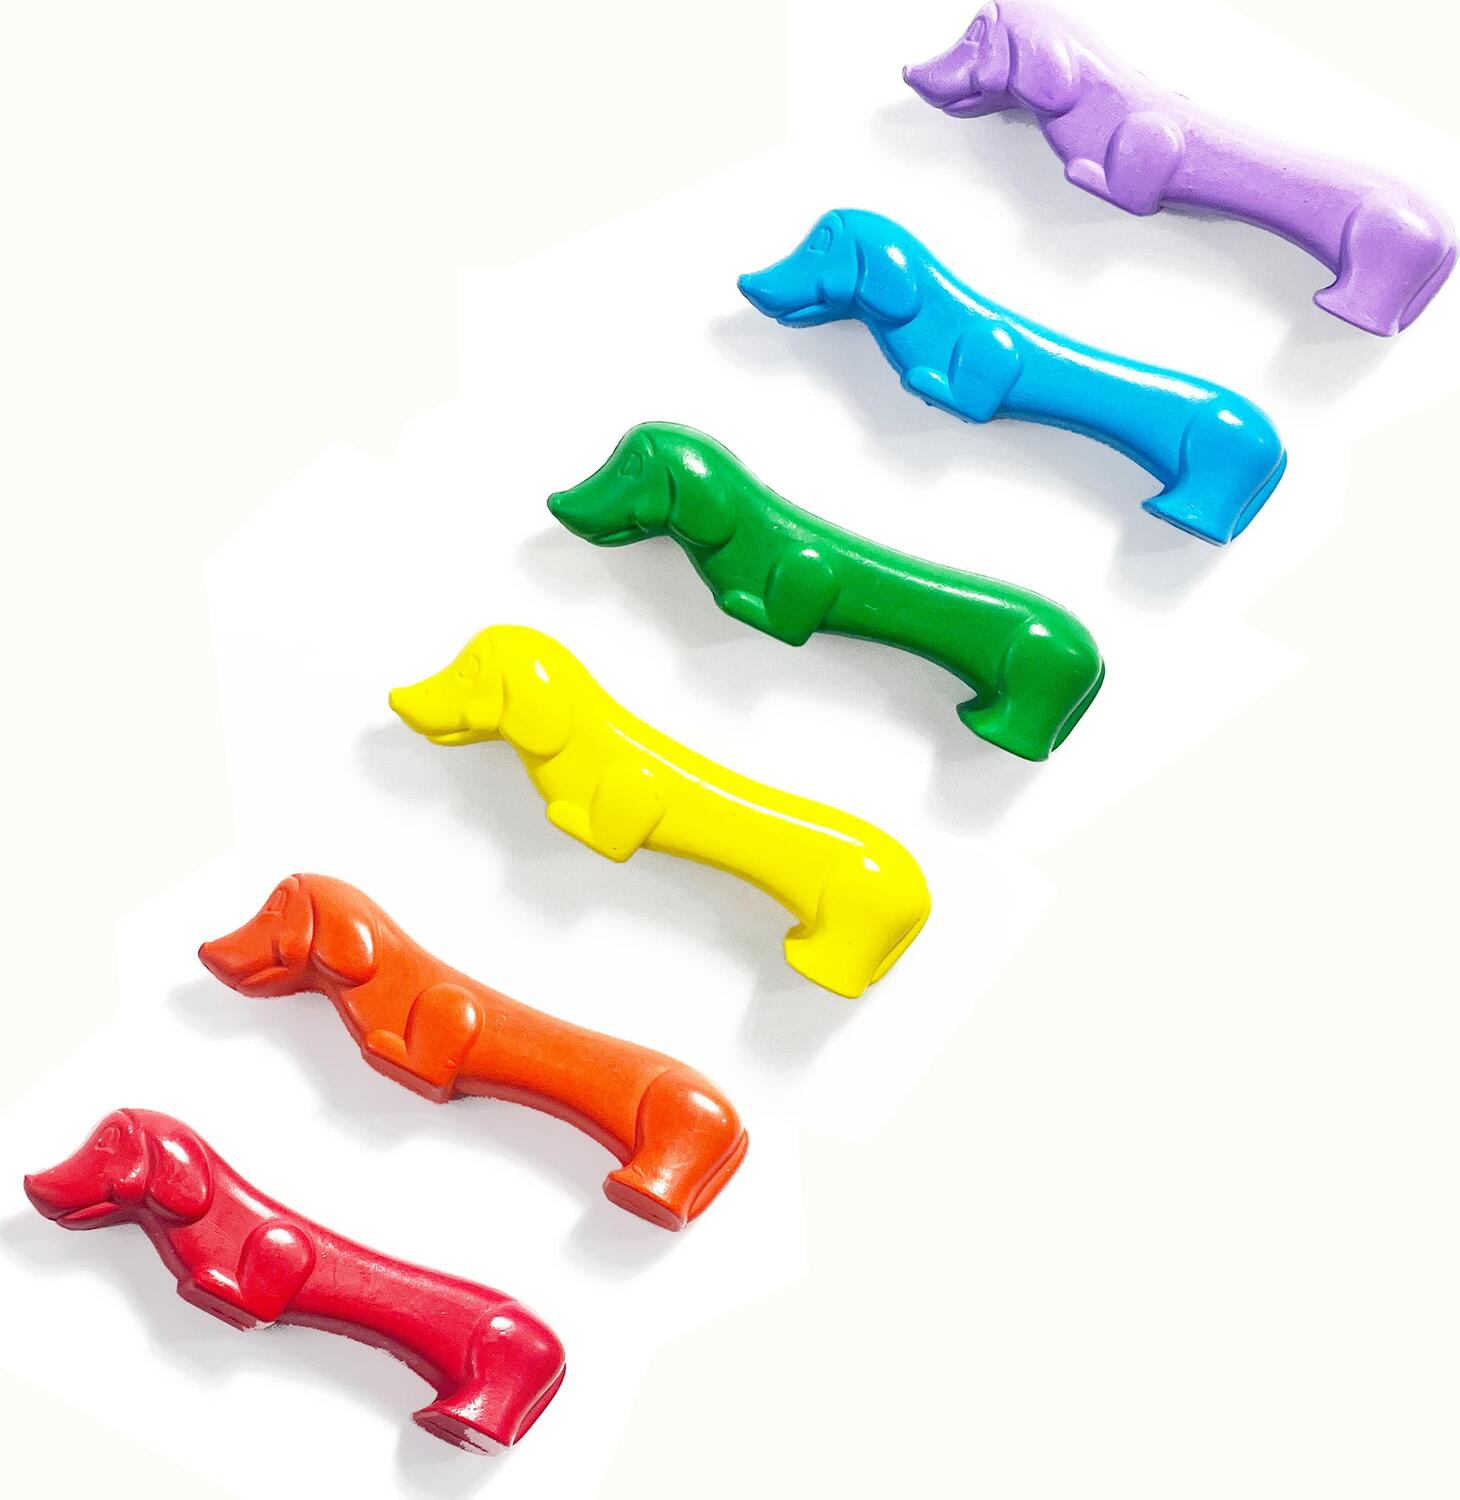 Pawsome Pups Dog Crayons - Set of 6